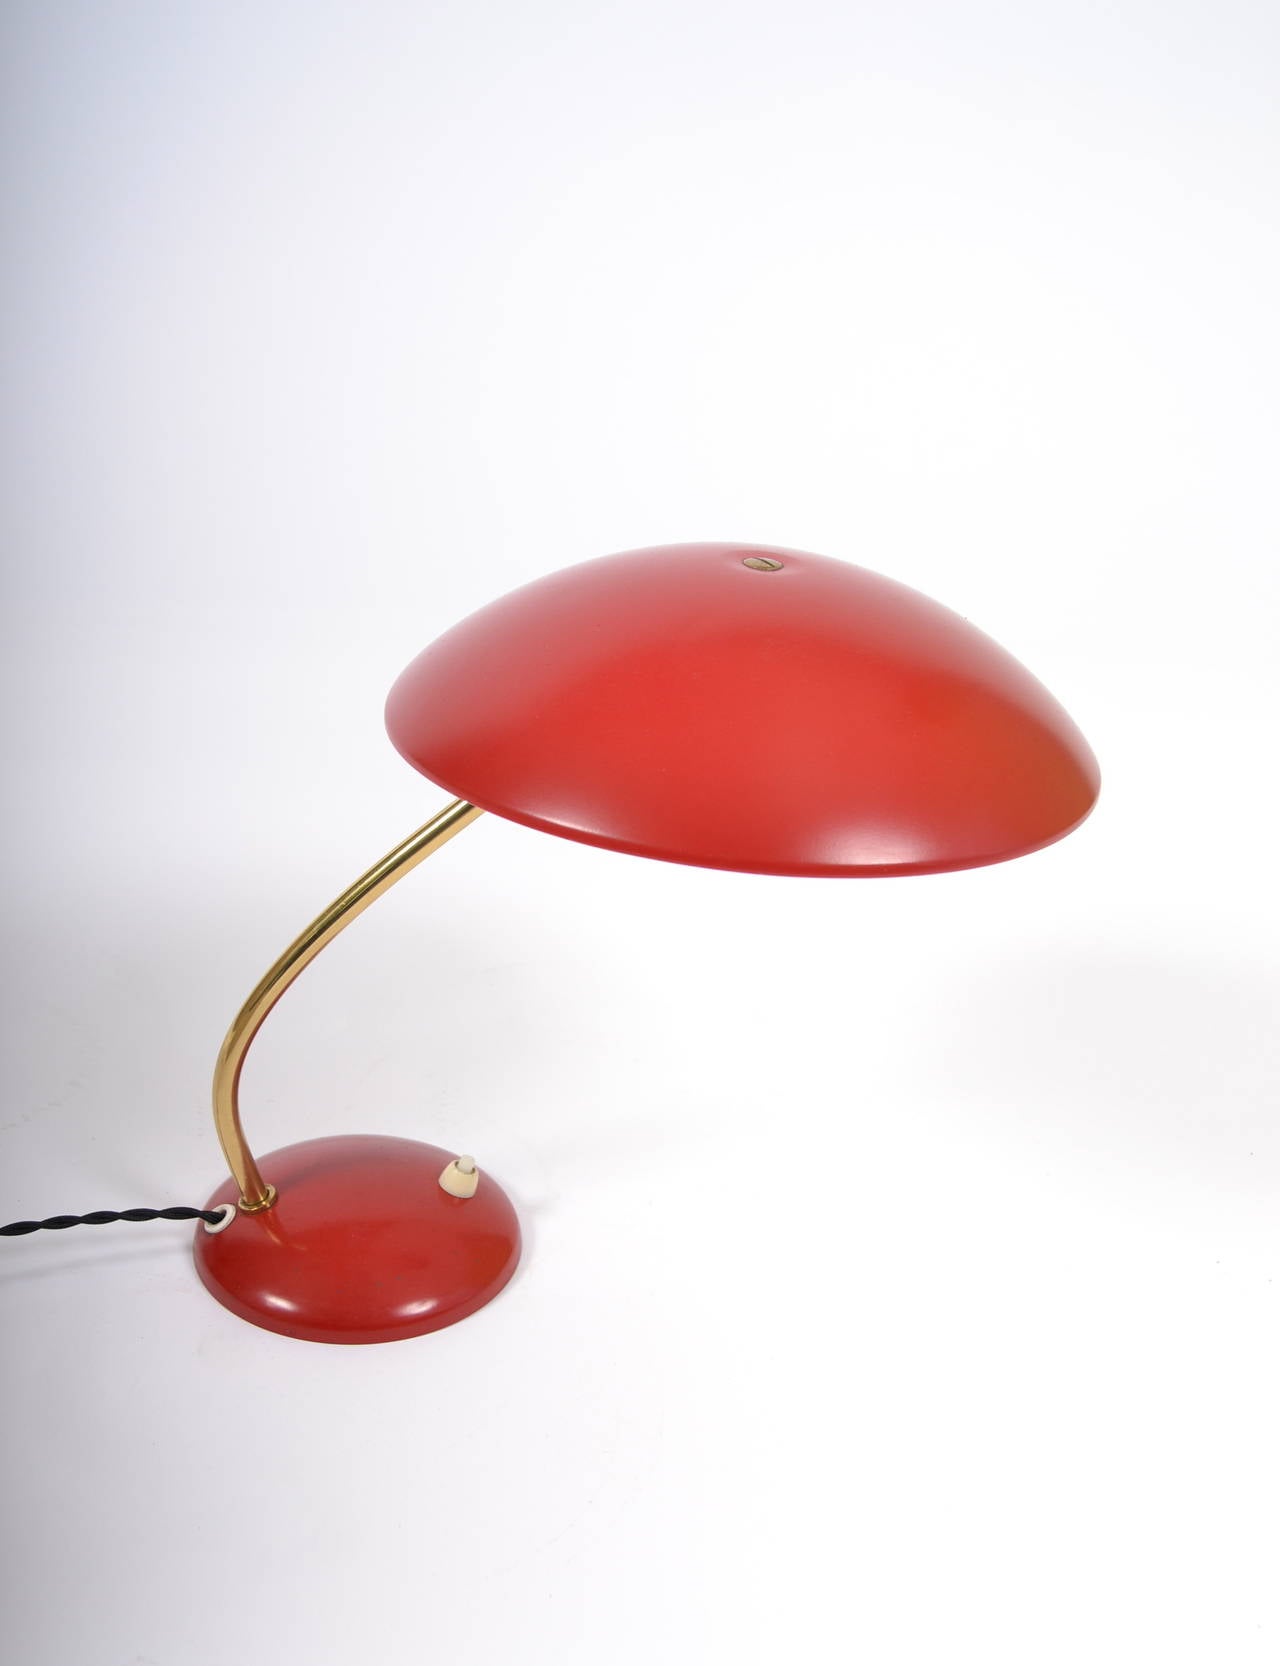 Charistian Dell Table lamp

original laquer
rewired

base Ø14 cm
head 25 cm
height 25 cm